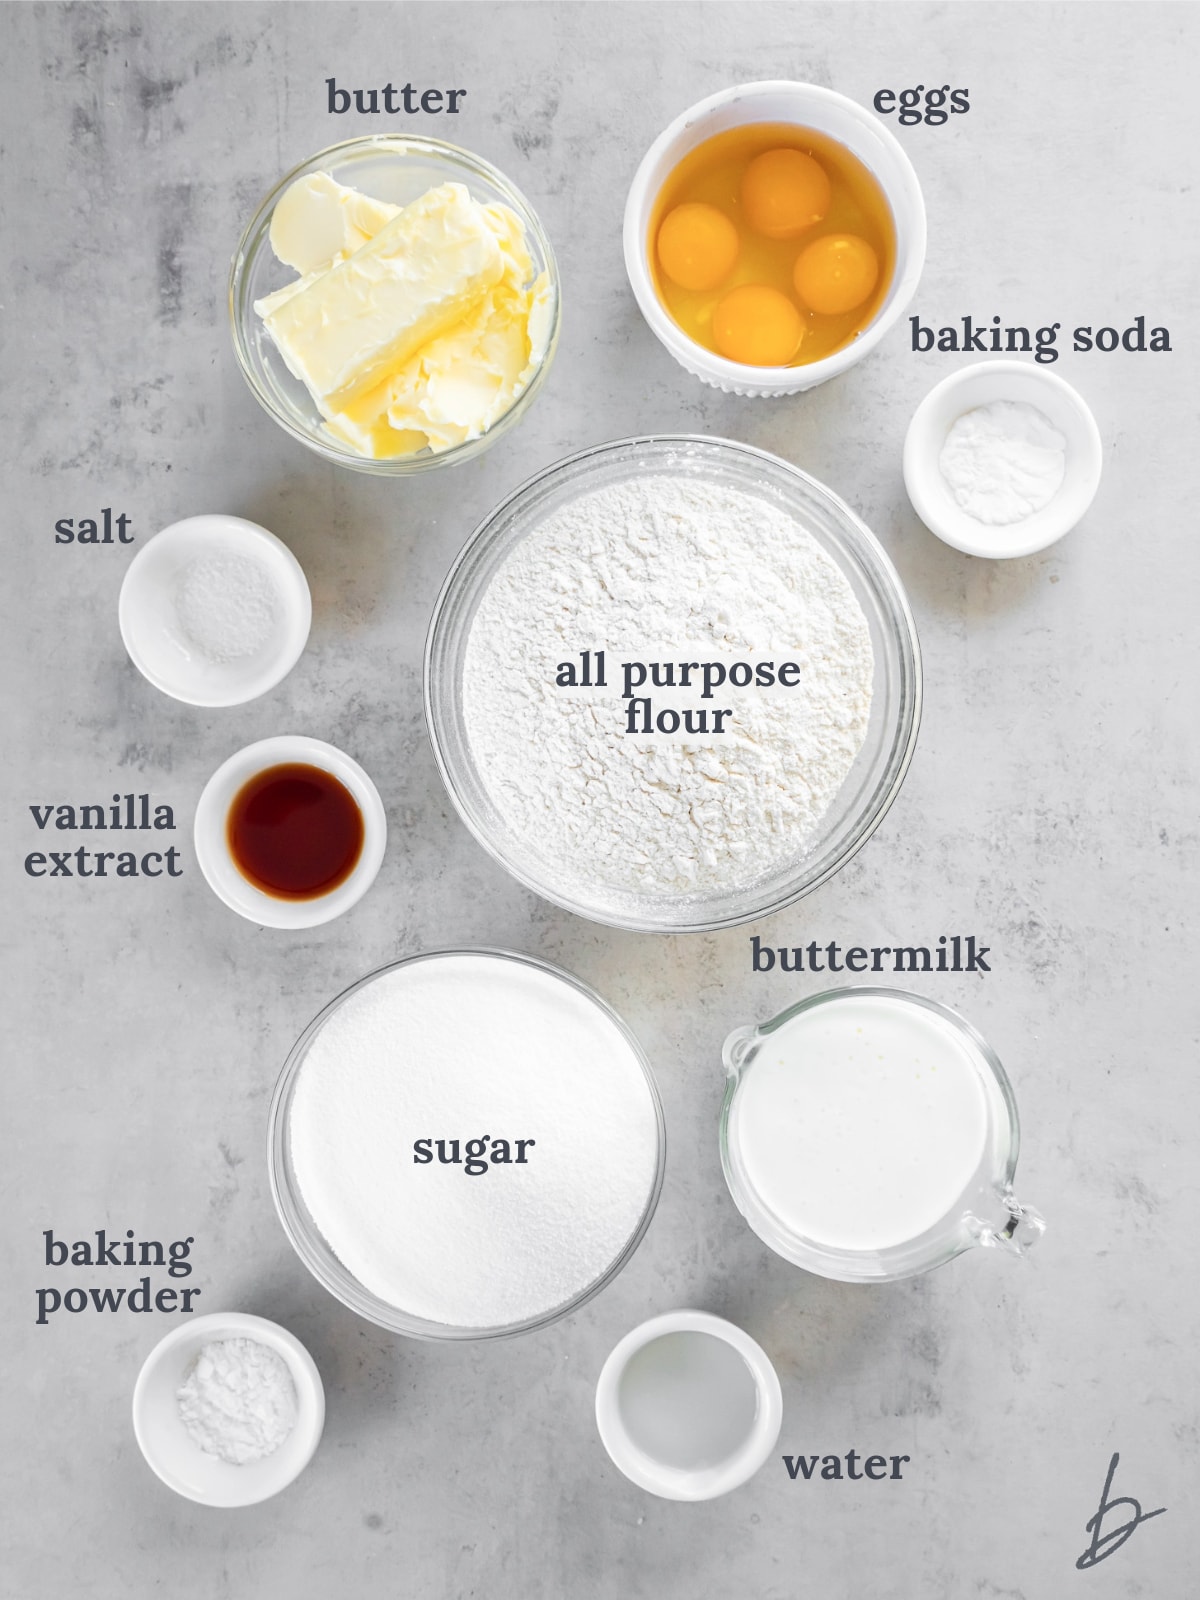 bowls of ingredients to make kentucky butter cake.